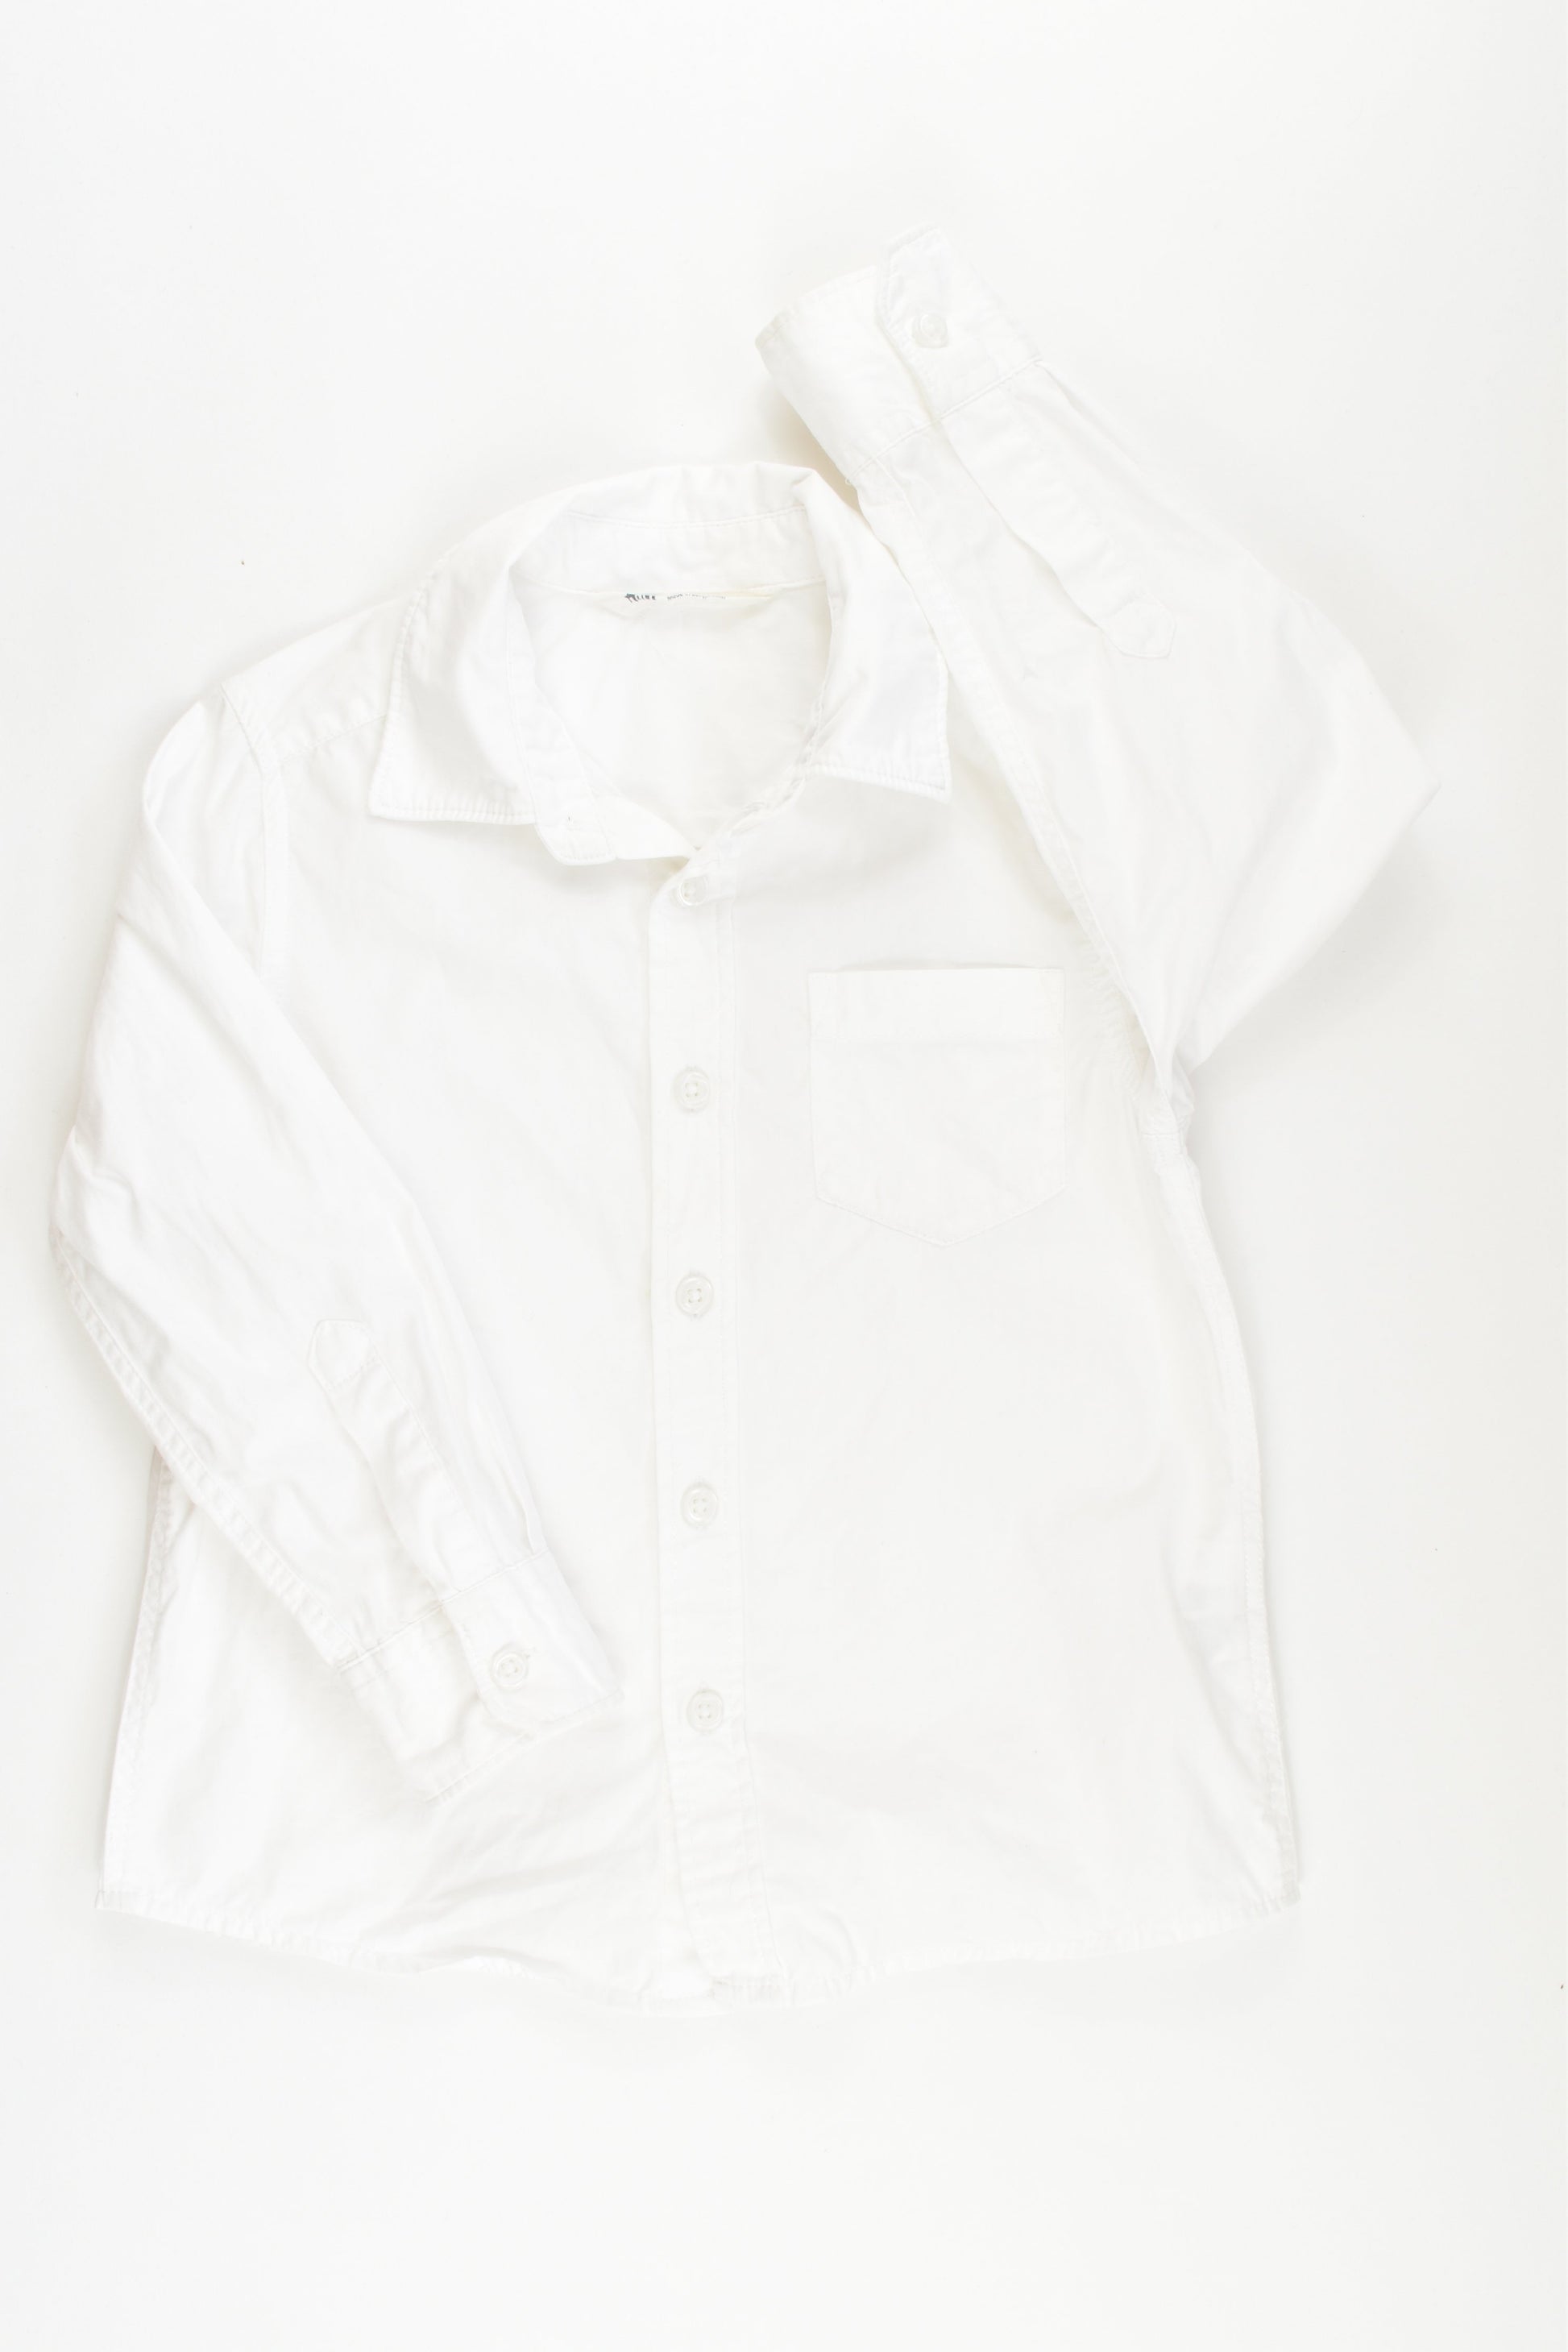 H&M Size 3-4 Collared Shirt